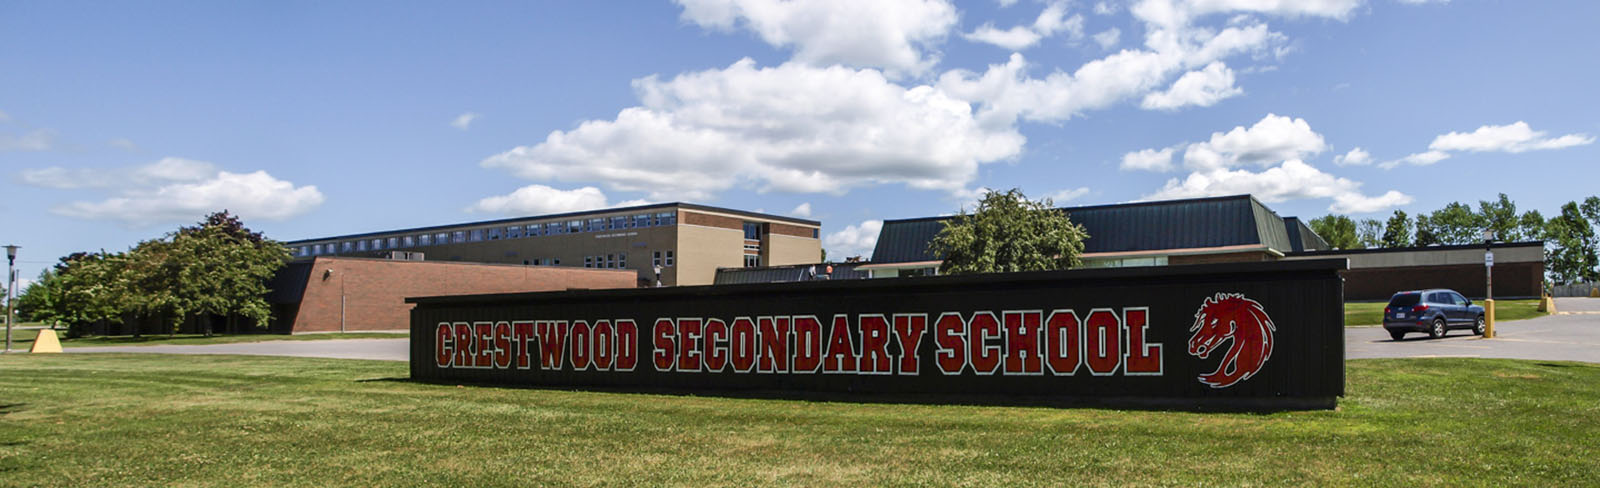 image of Crestwood Secondary School